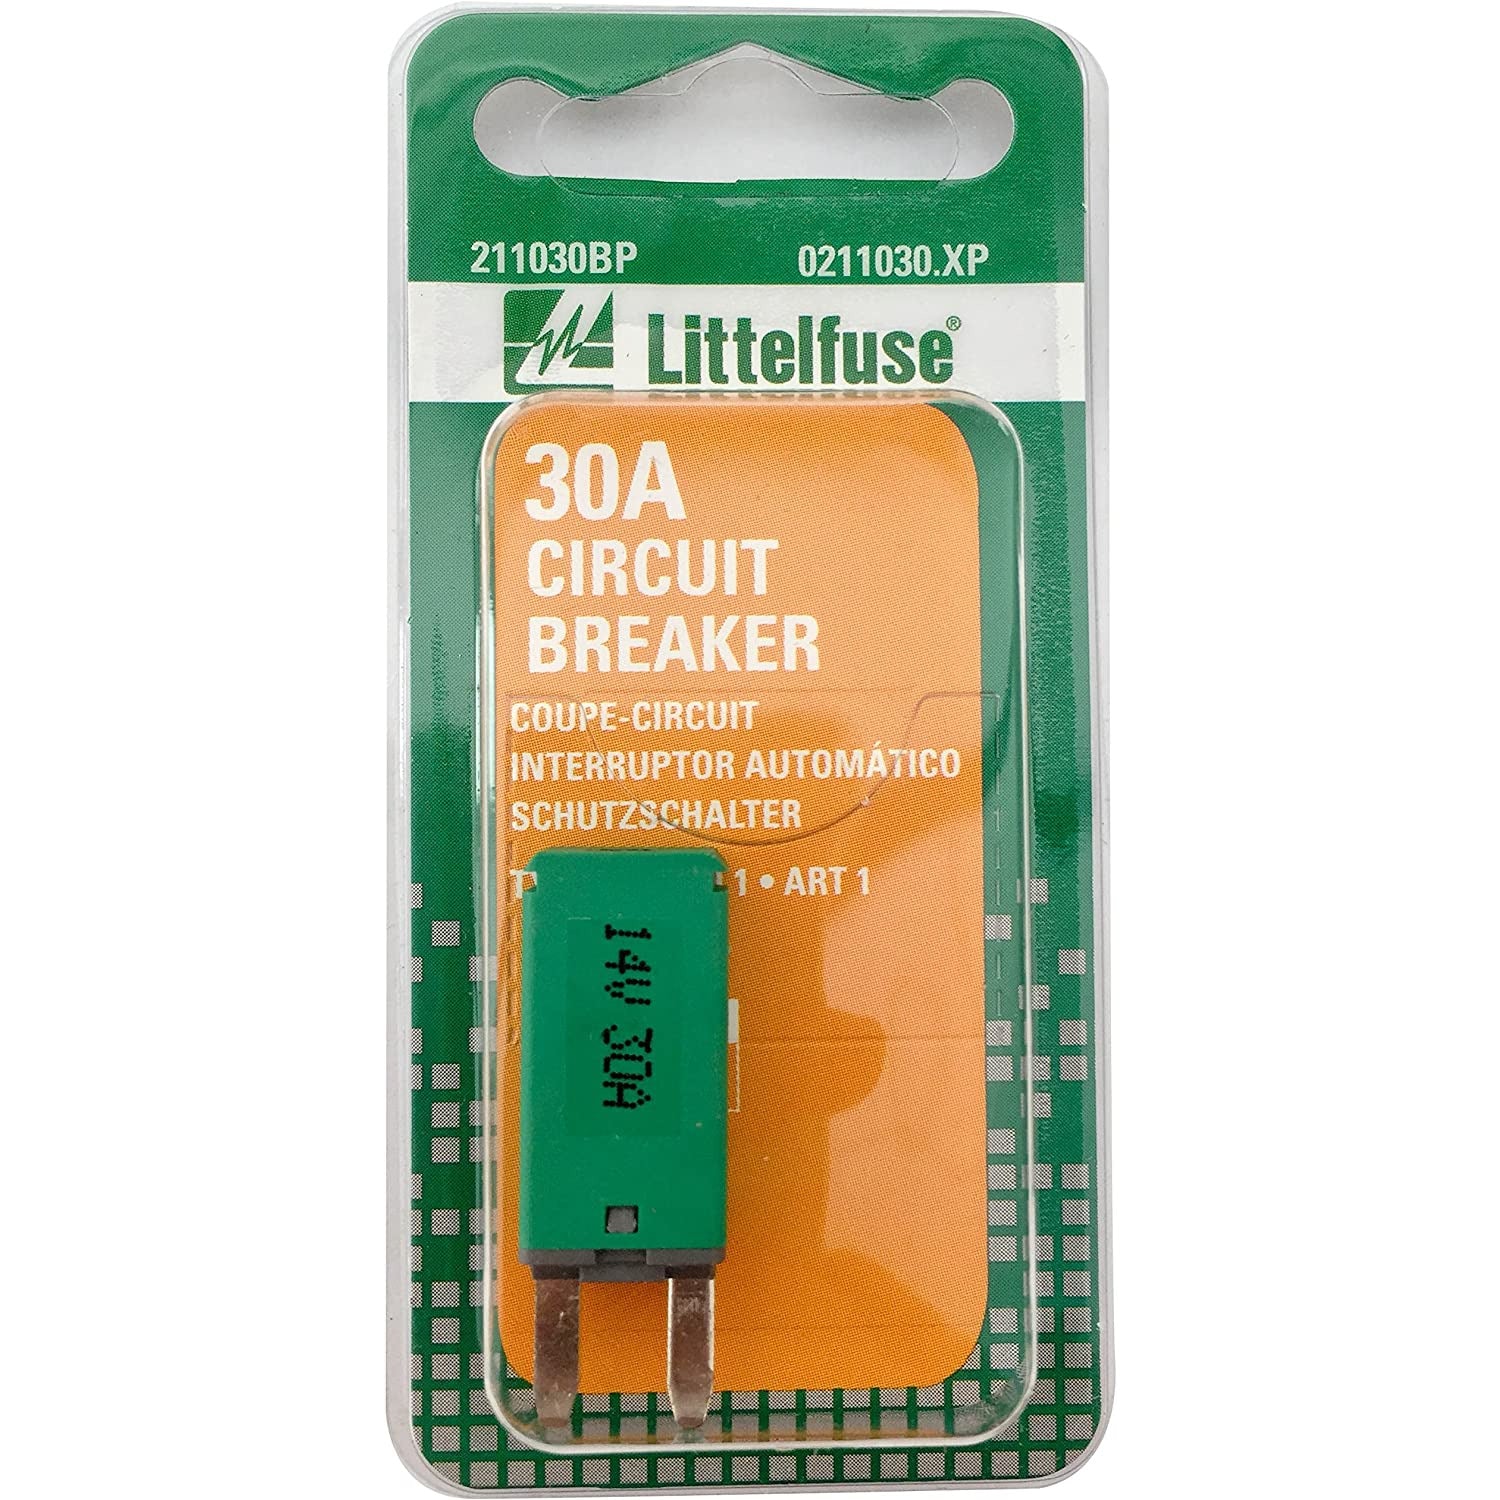 FUS 0211030.XP Littelfuse Mini Type Circuit Breaker (30A)